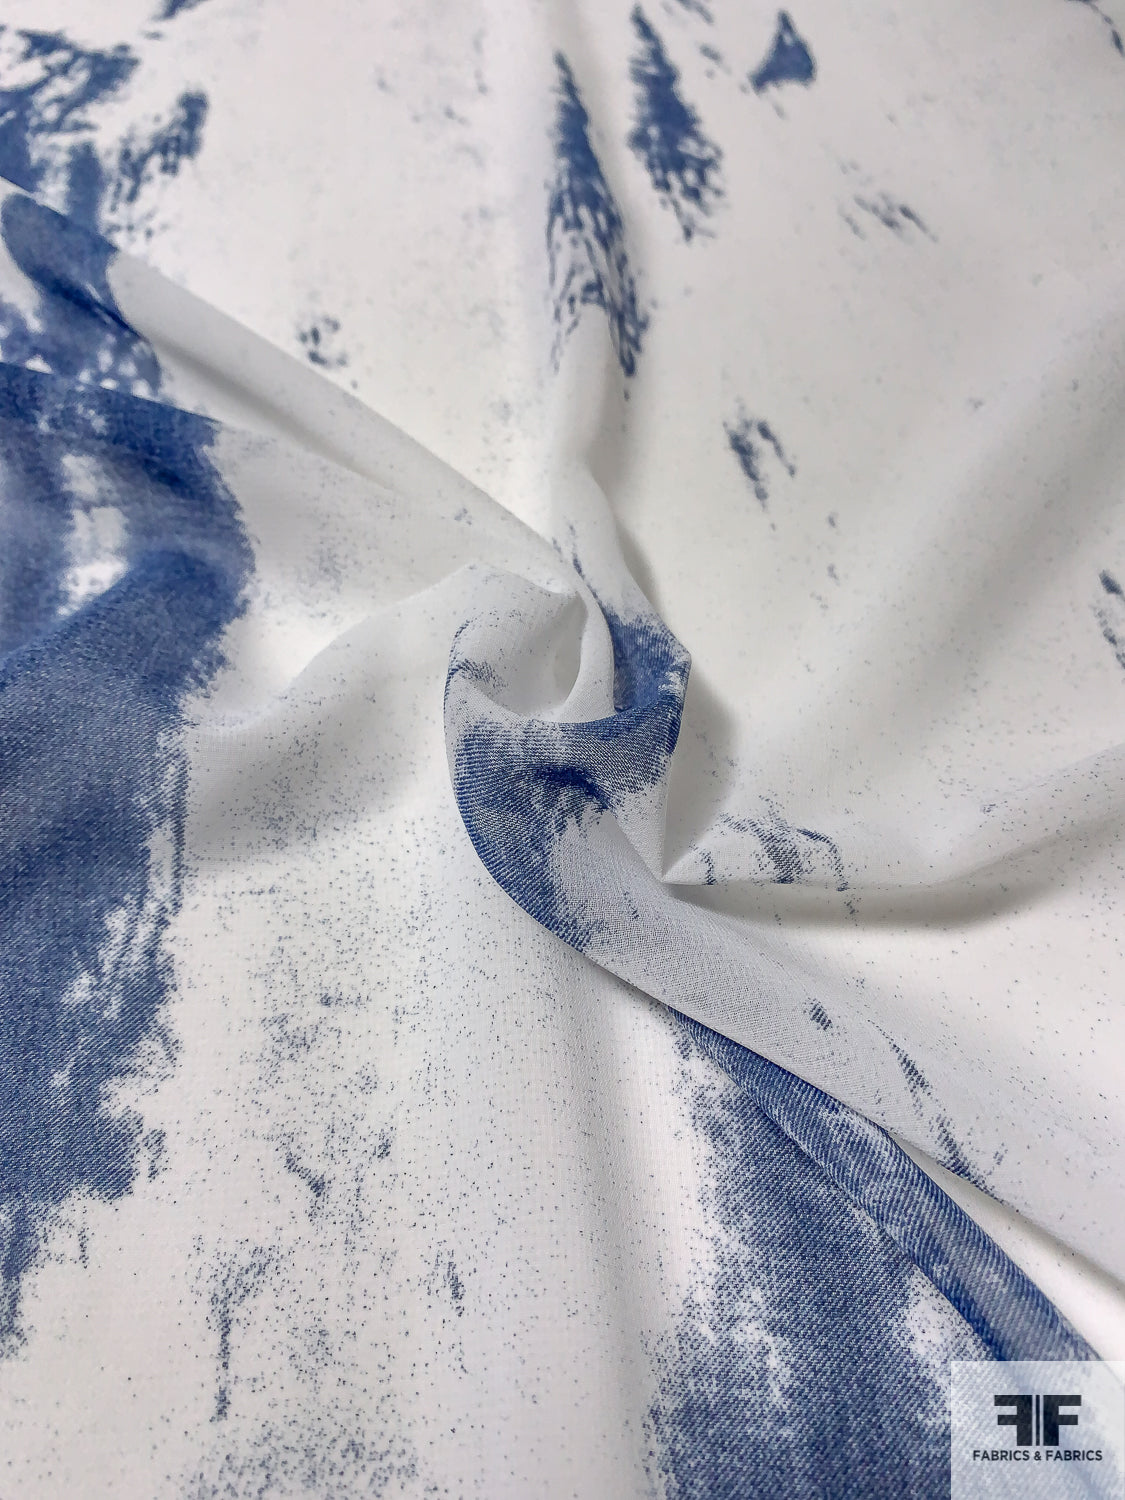 Abstract Tie-Dye Printed Polyester Chiffon - Denim Blue / White